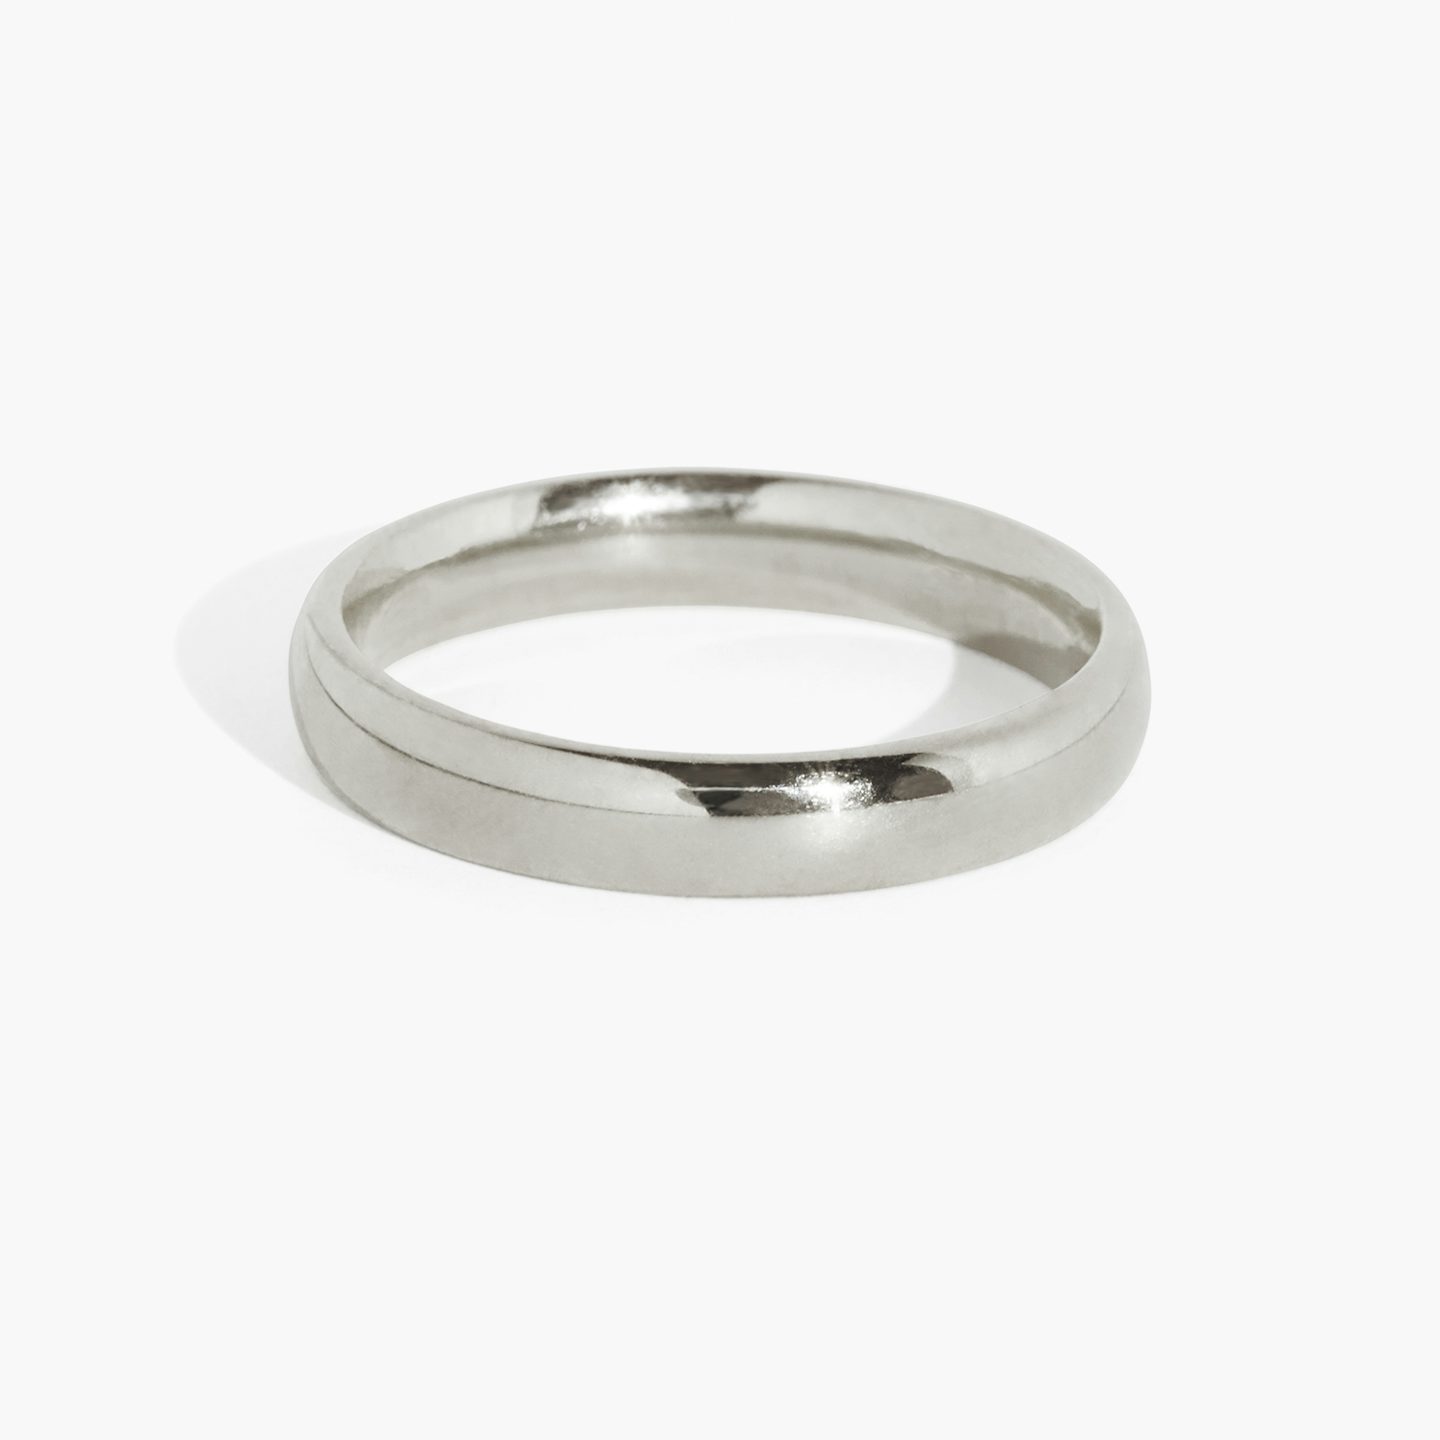 The Round Platinum Wedding Ring